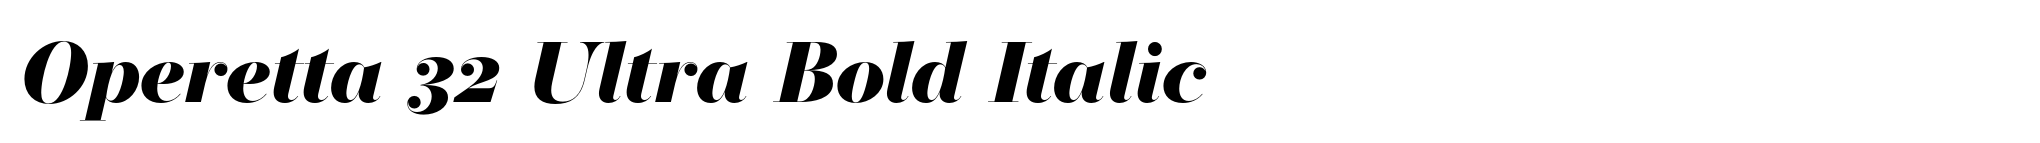 Operetta 32 Ultra Bold Italic image